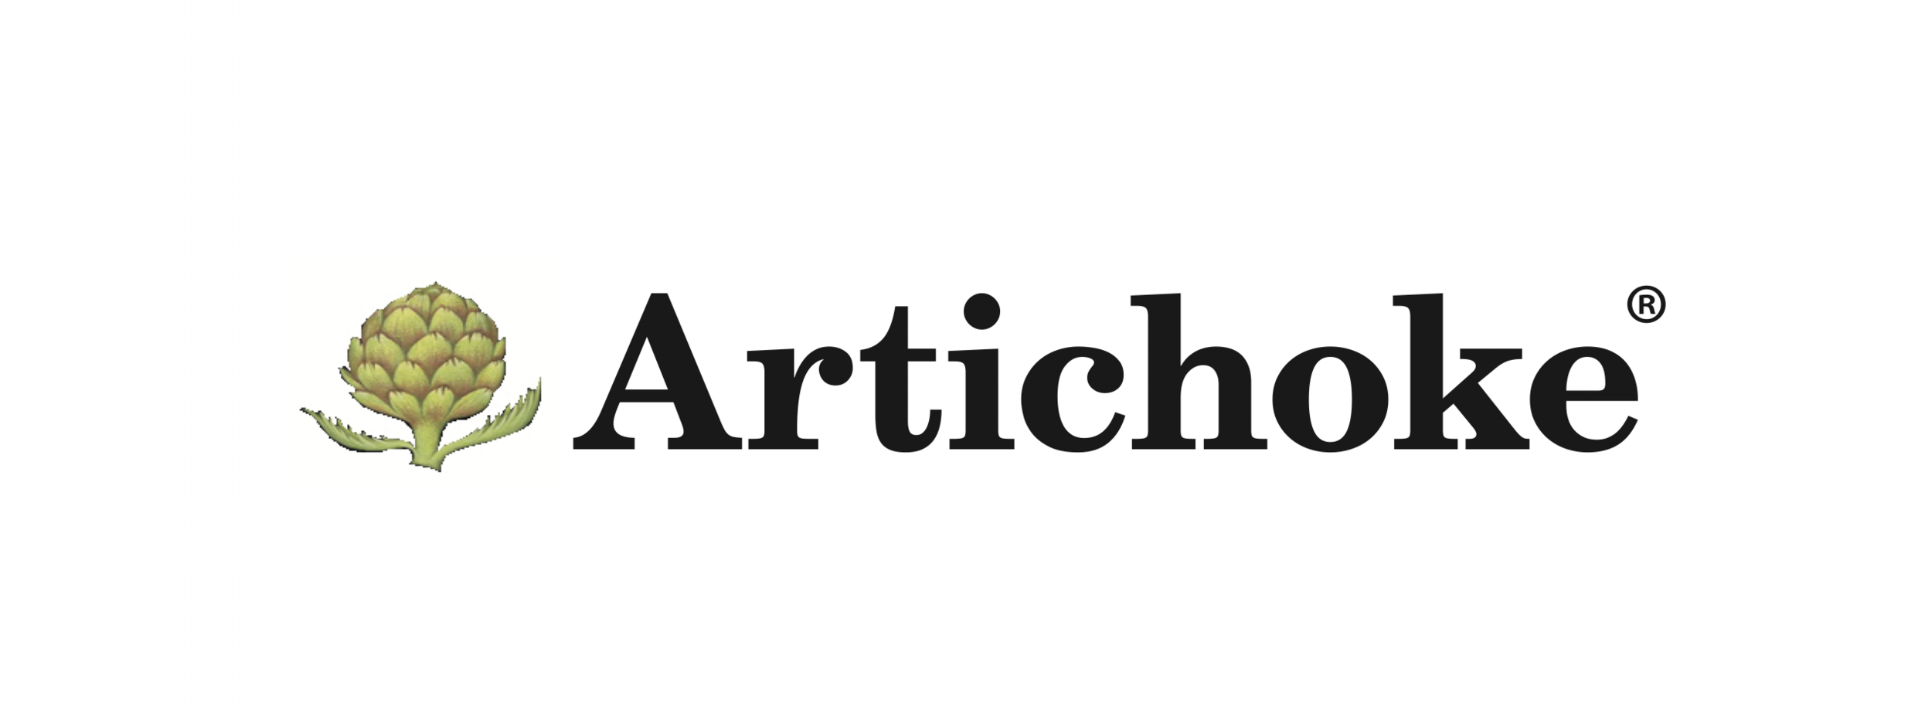 Artichoke.png